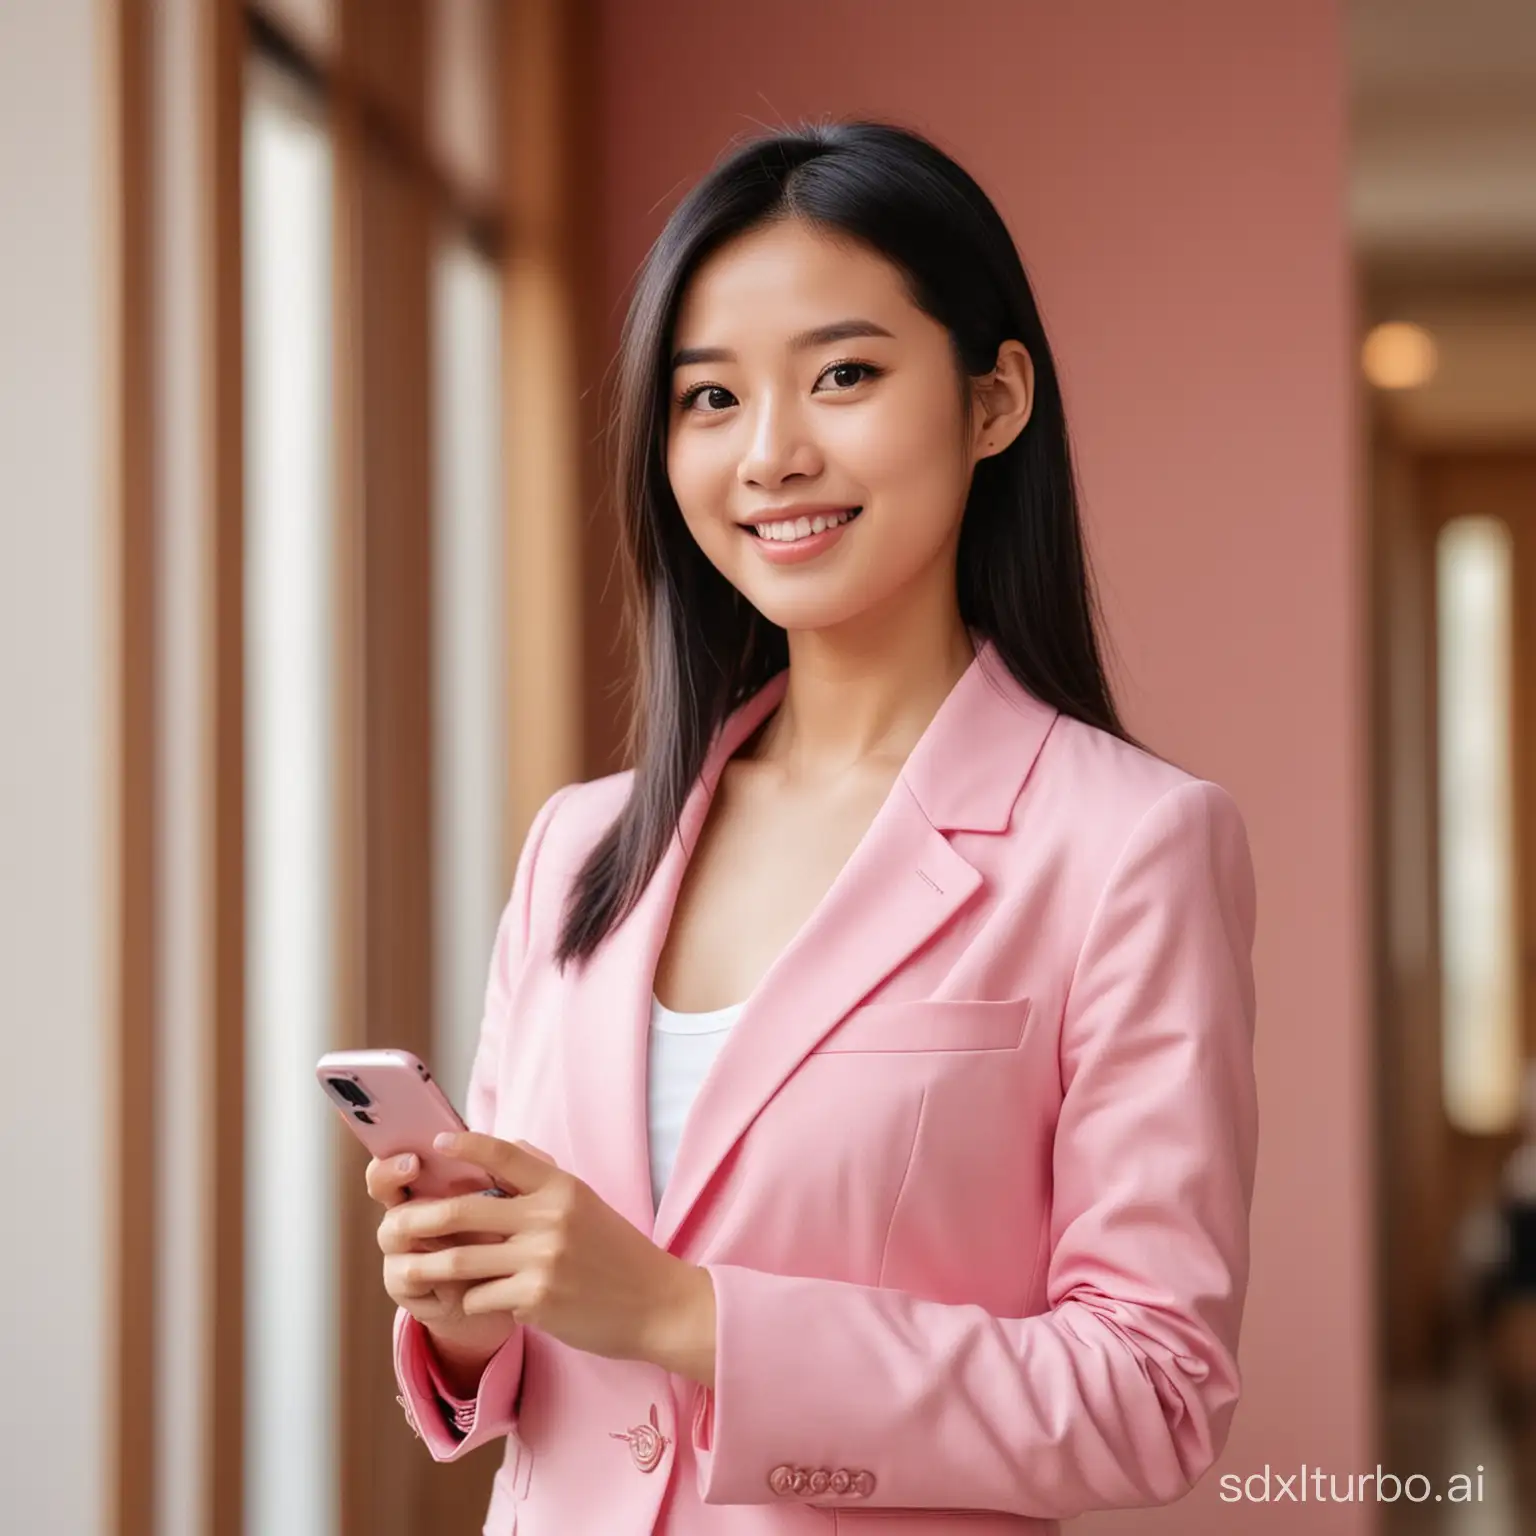 seorang wanita chinese berambut lurus sebahu, baju blazer pink, sedang memegang handphone warna pink ke arah kiri, arah pandangan ke depan sambil tersenyum, di sebelah kanan nya pemandangan di dalam rumah yang terang, foto nyata HD